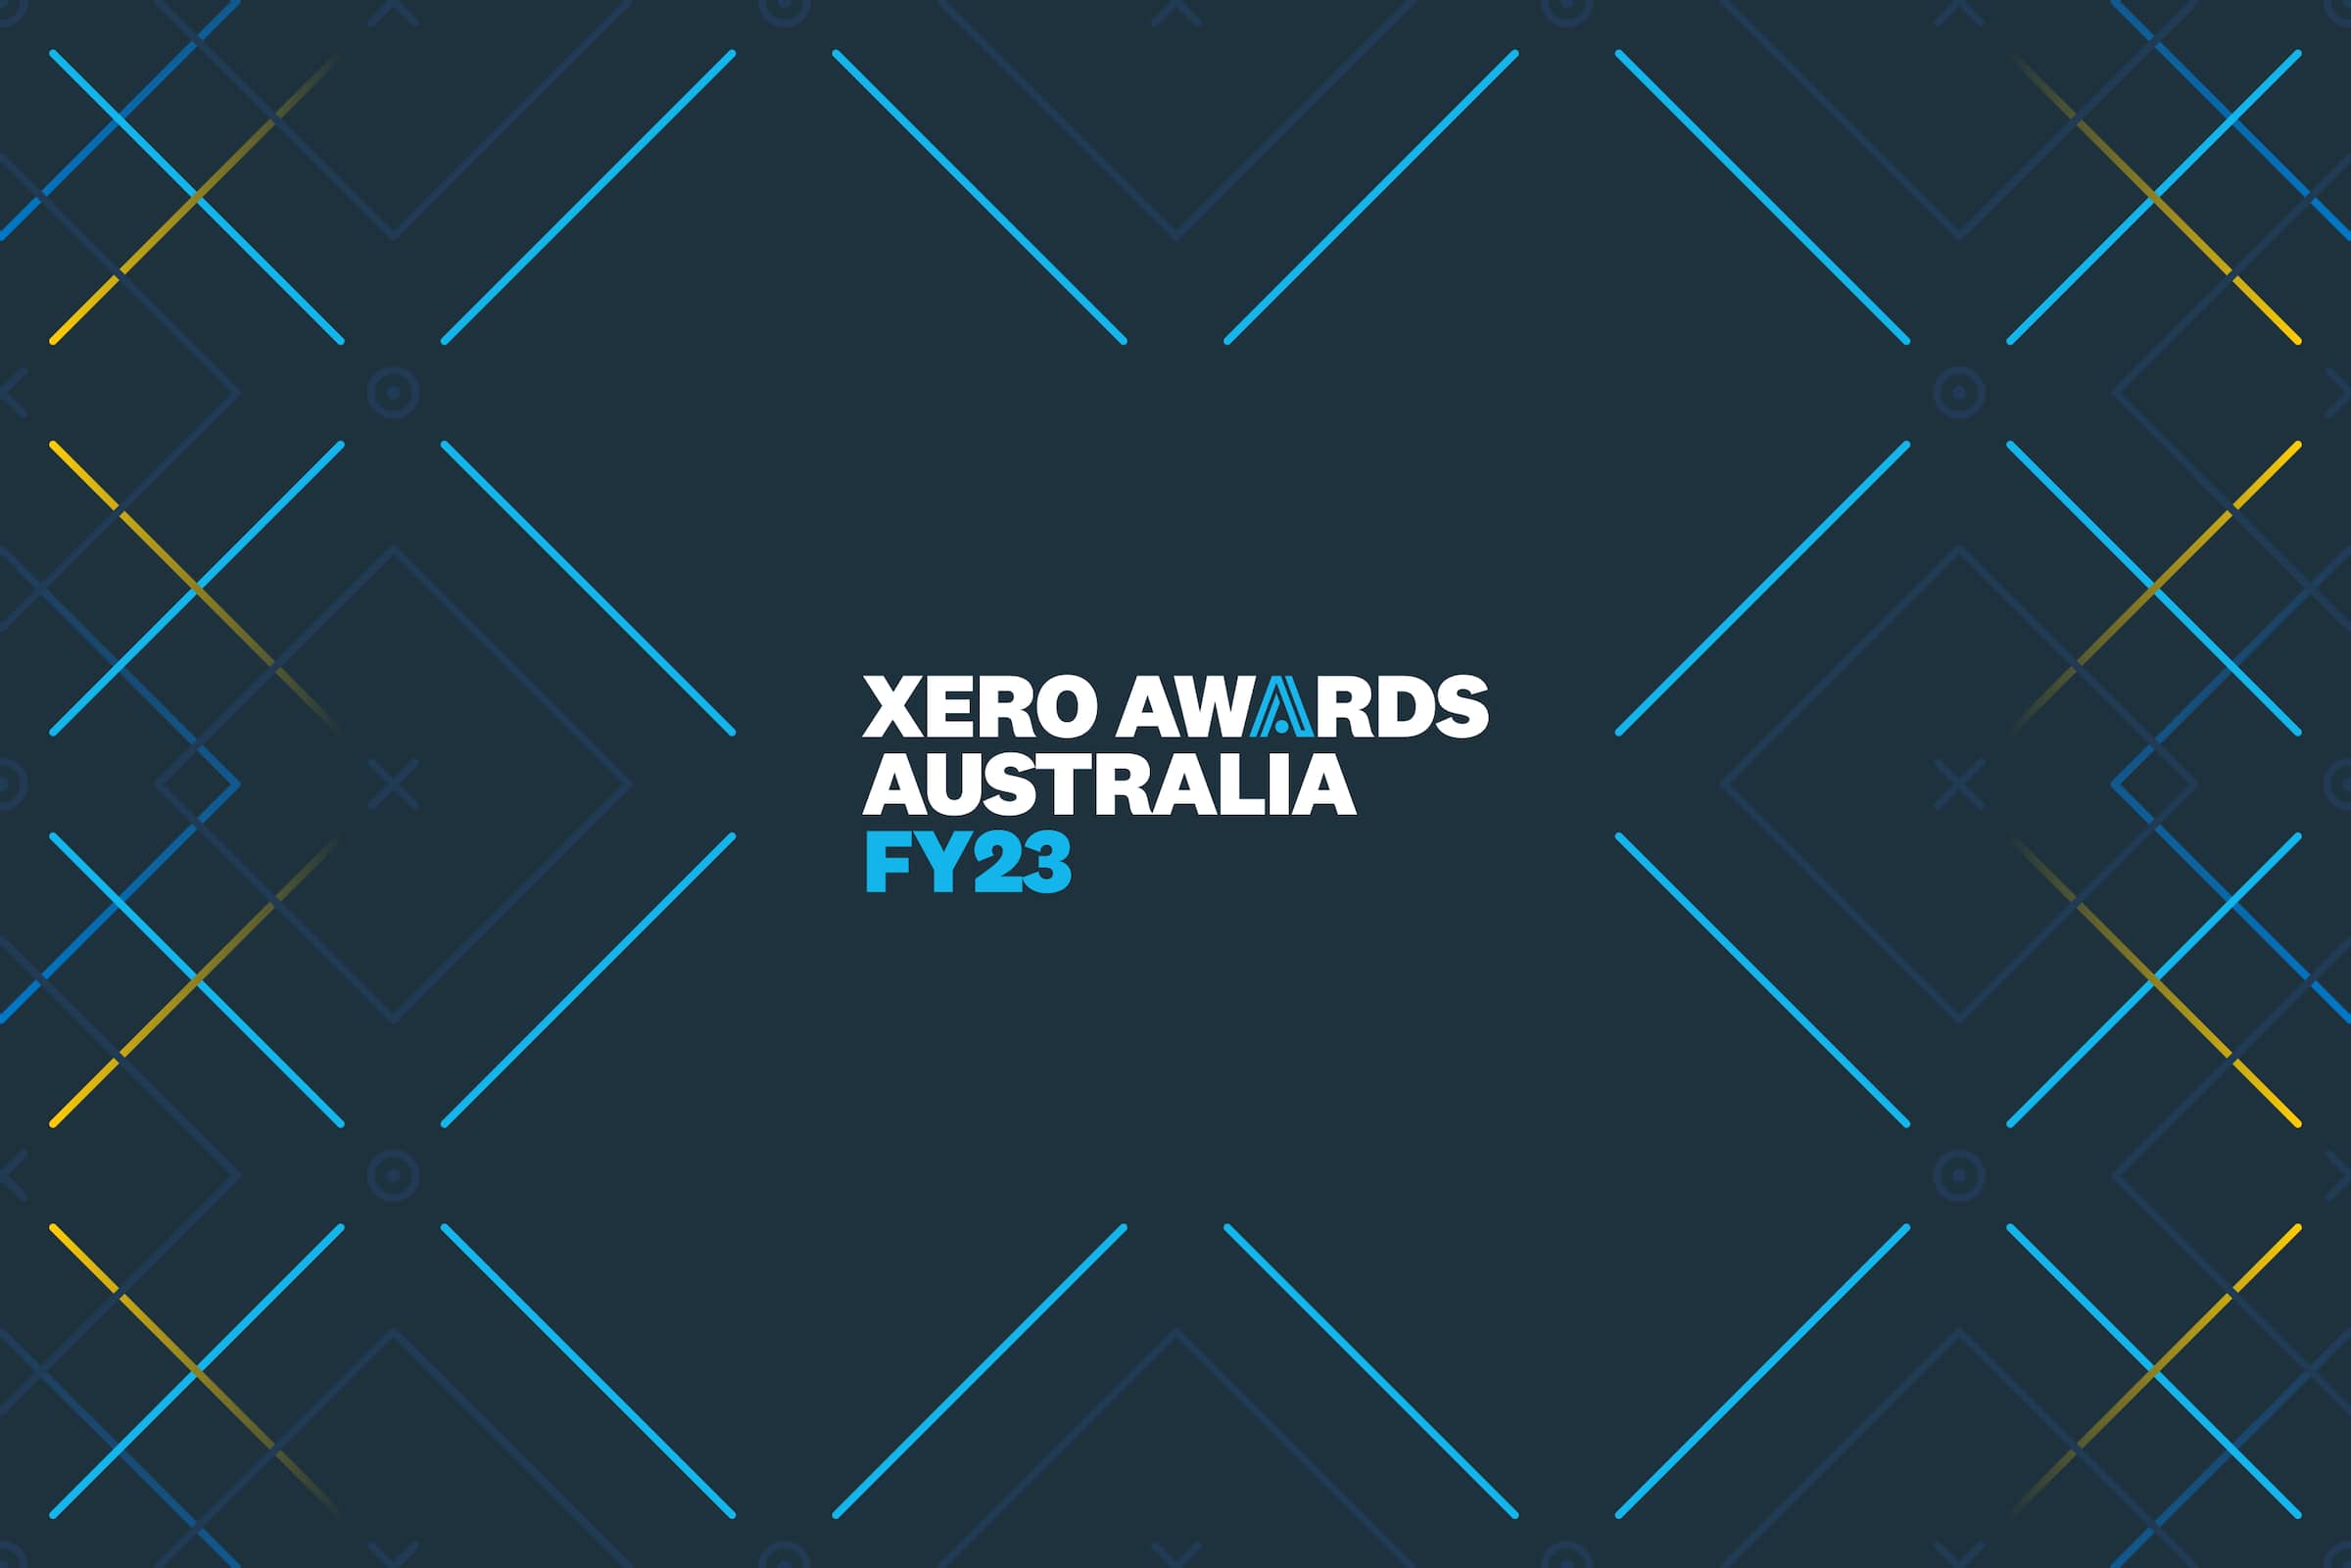 Xero Awards Australia FY23